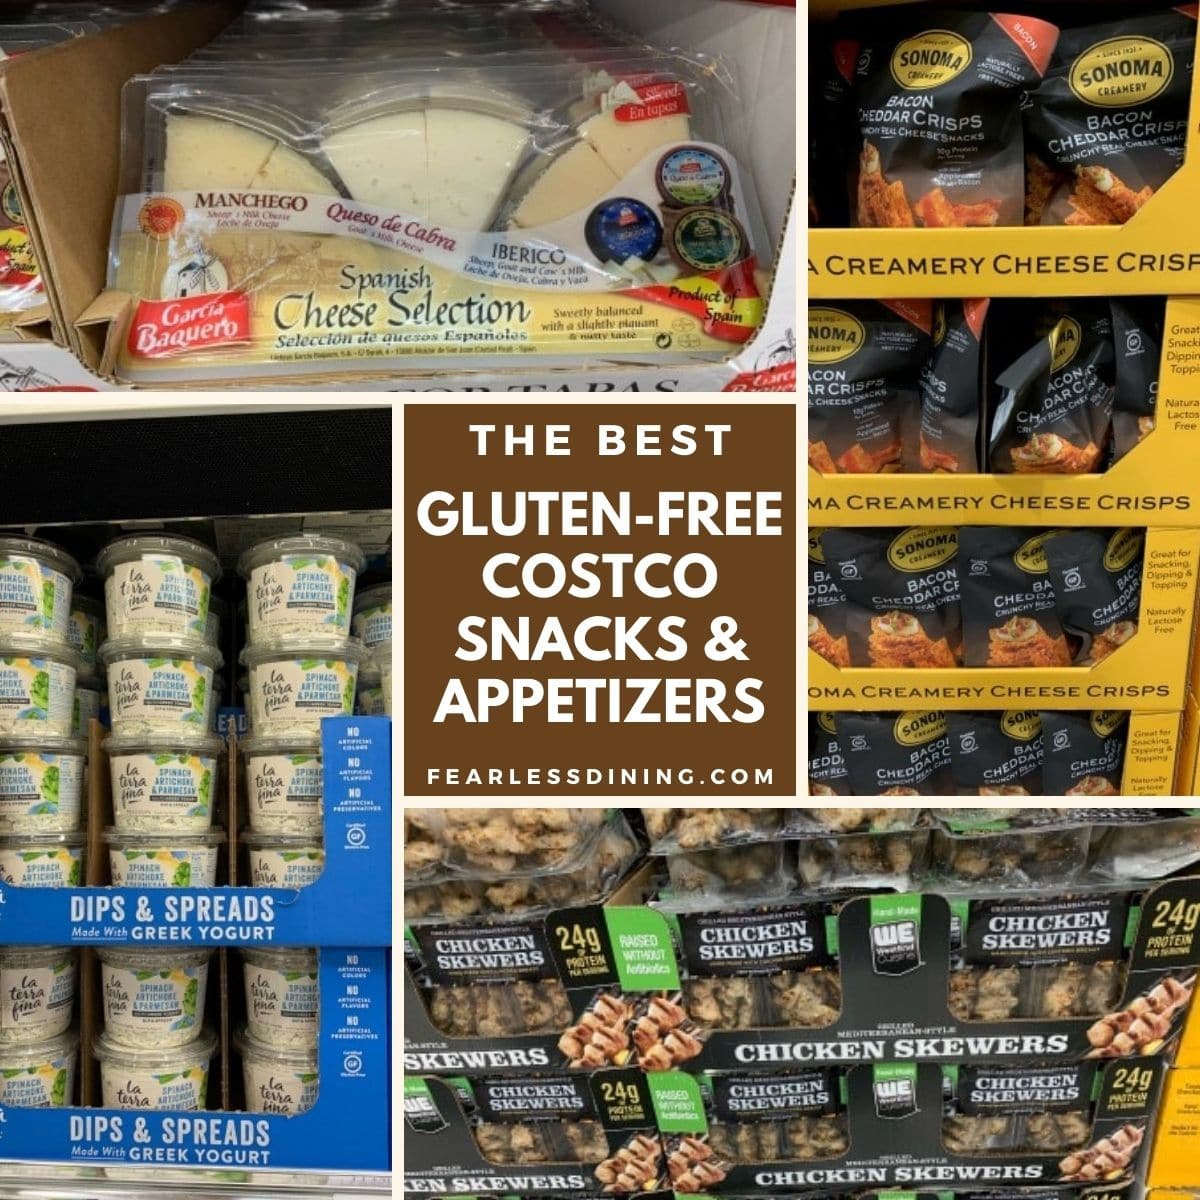 Four photos of costco snacks on shelves.